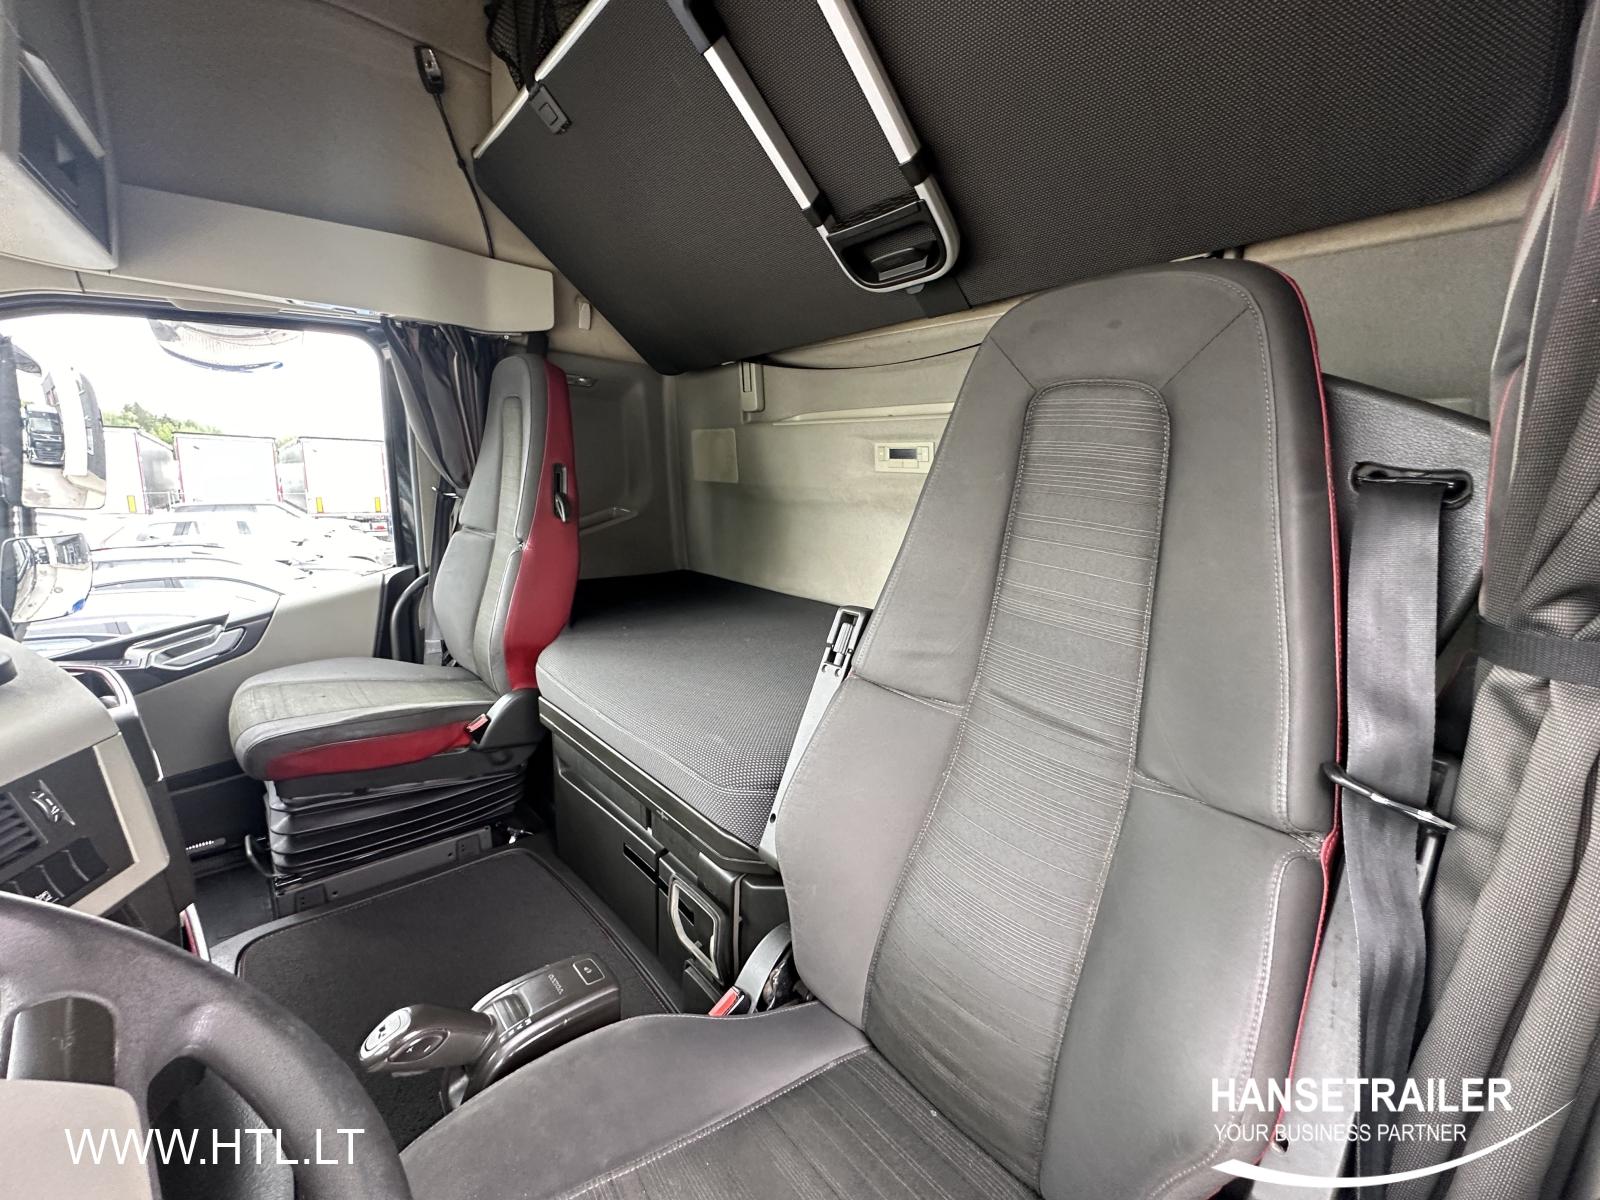 2018 Kuormaauto 4x2 Volvo FH Chassis KB XL 500